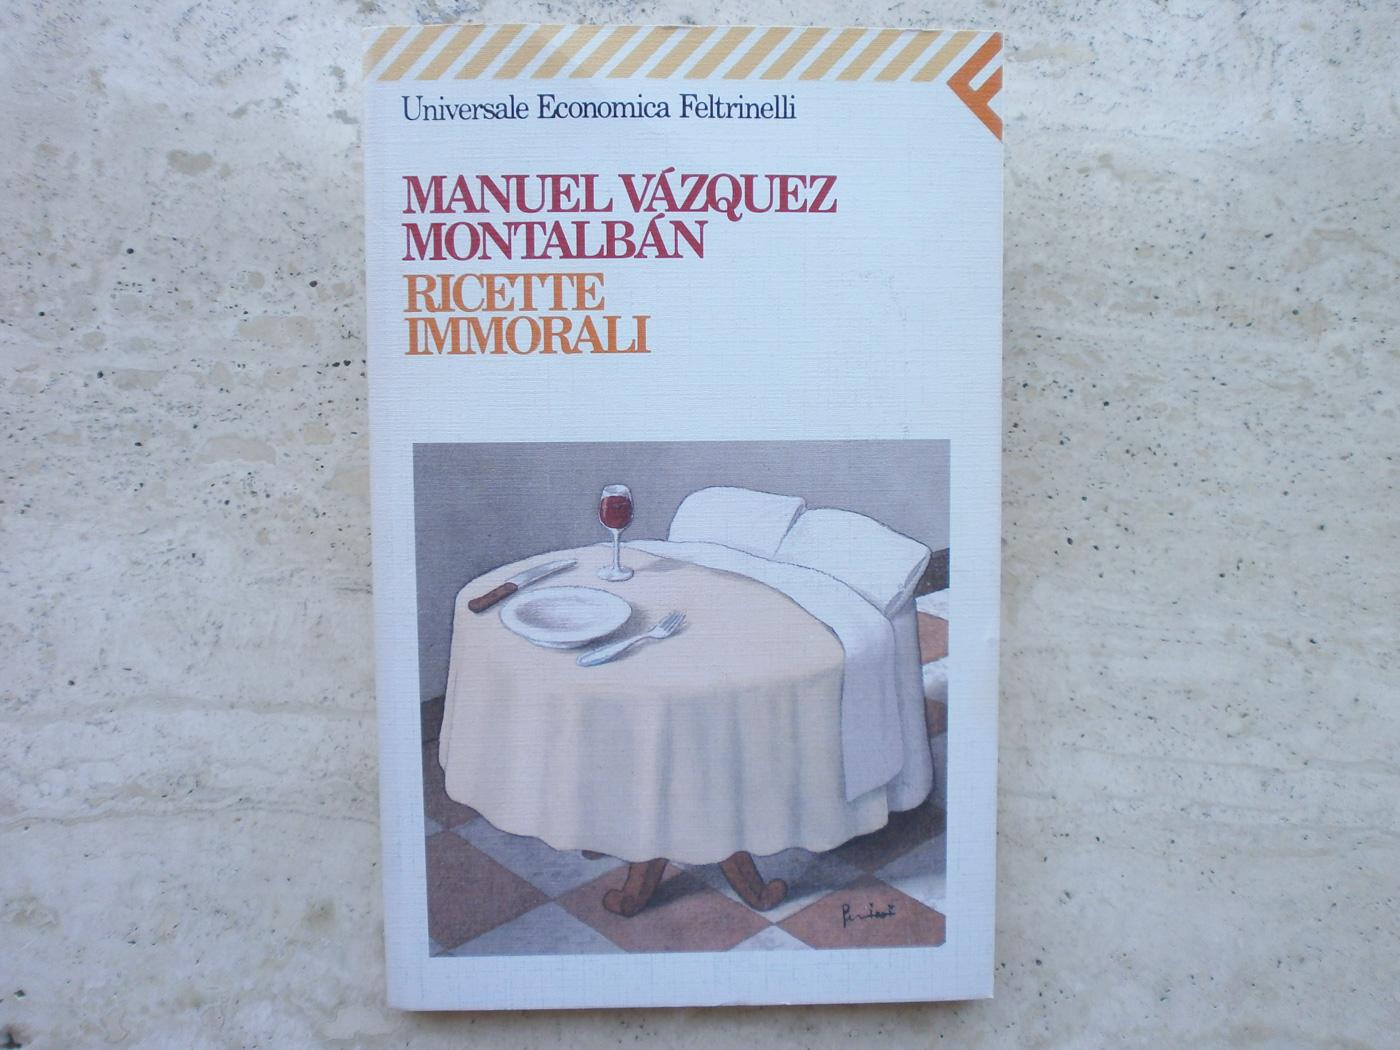 Ricette immorali. Vazquez Montalban Feltrinelli 1997 - Vazquez Montalban, Manuel